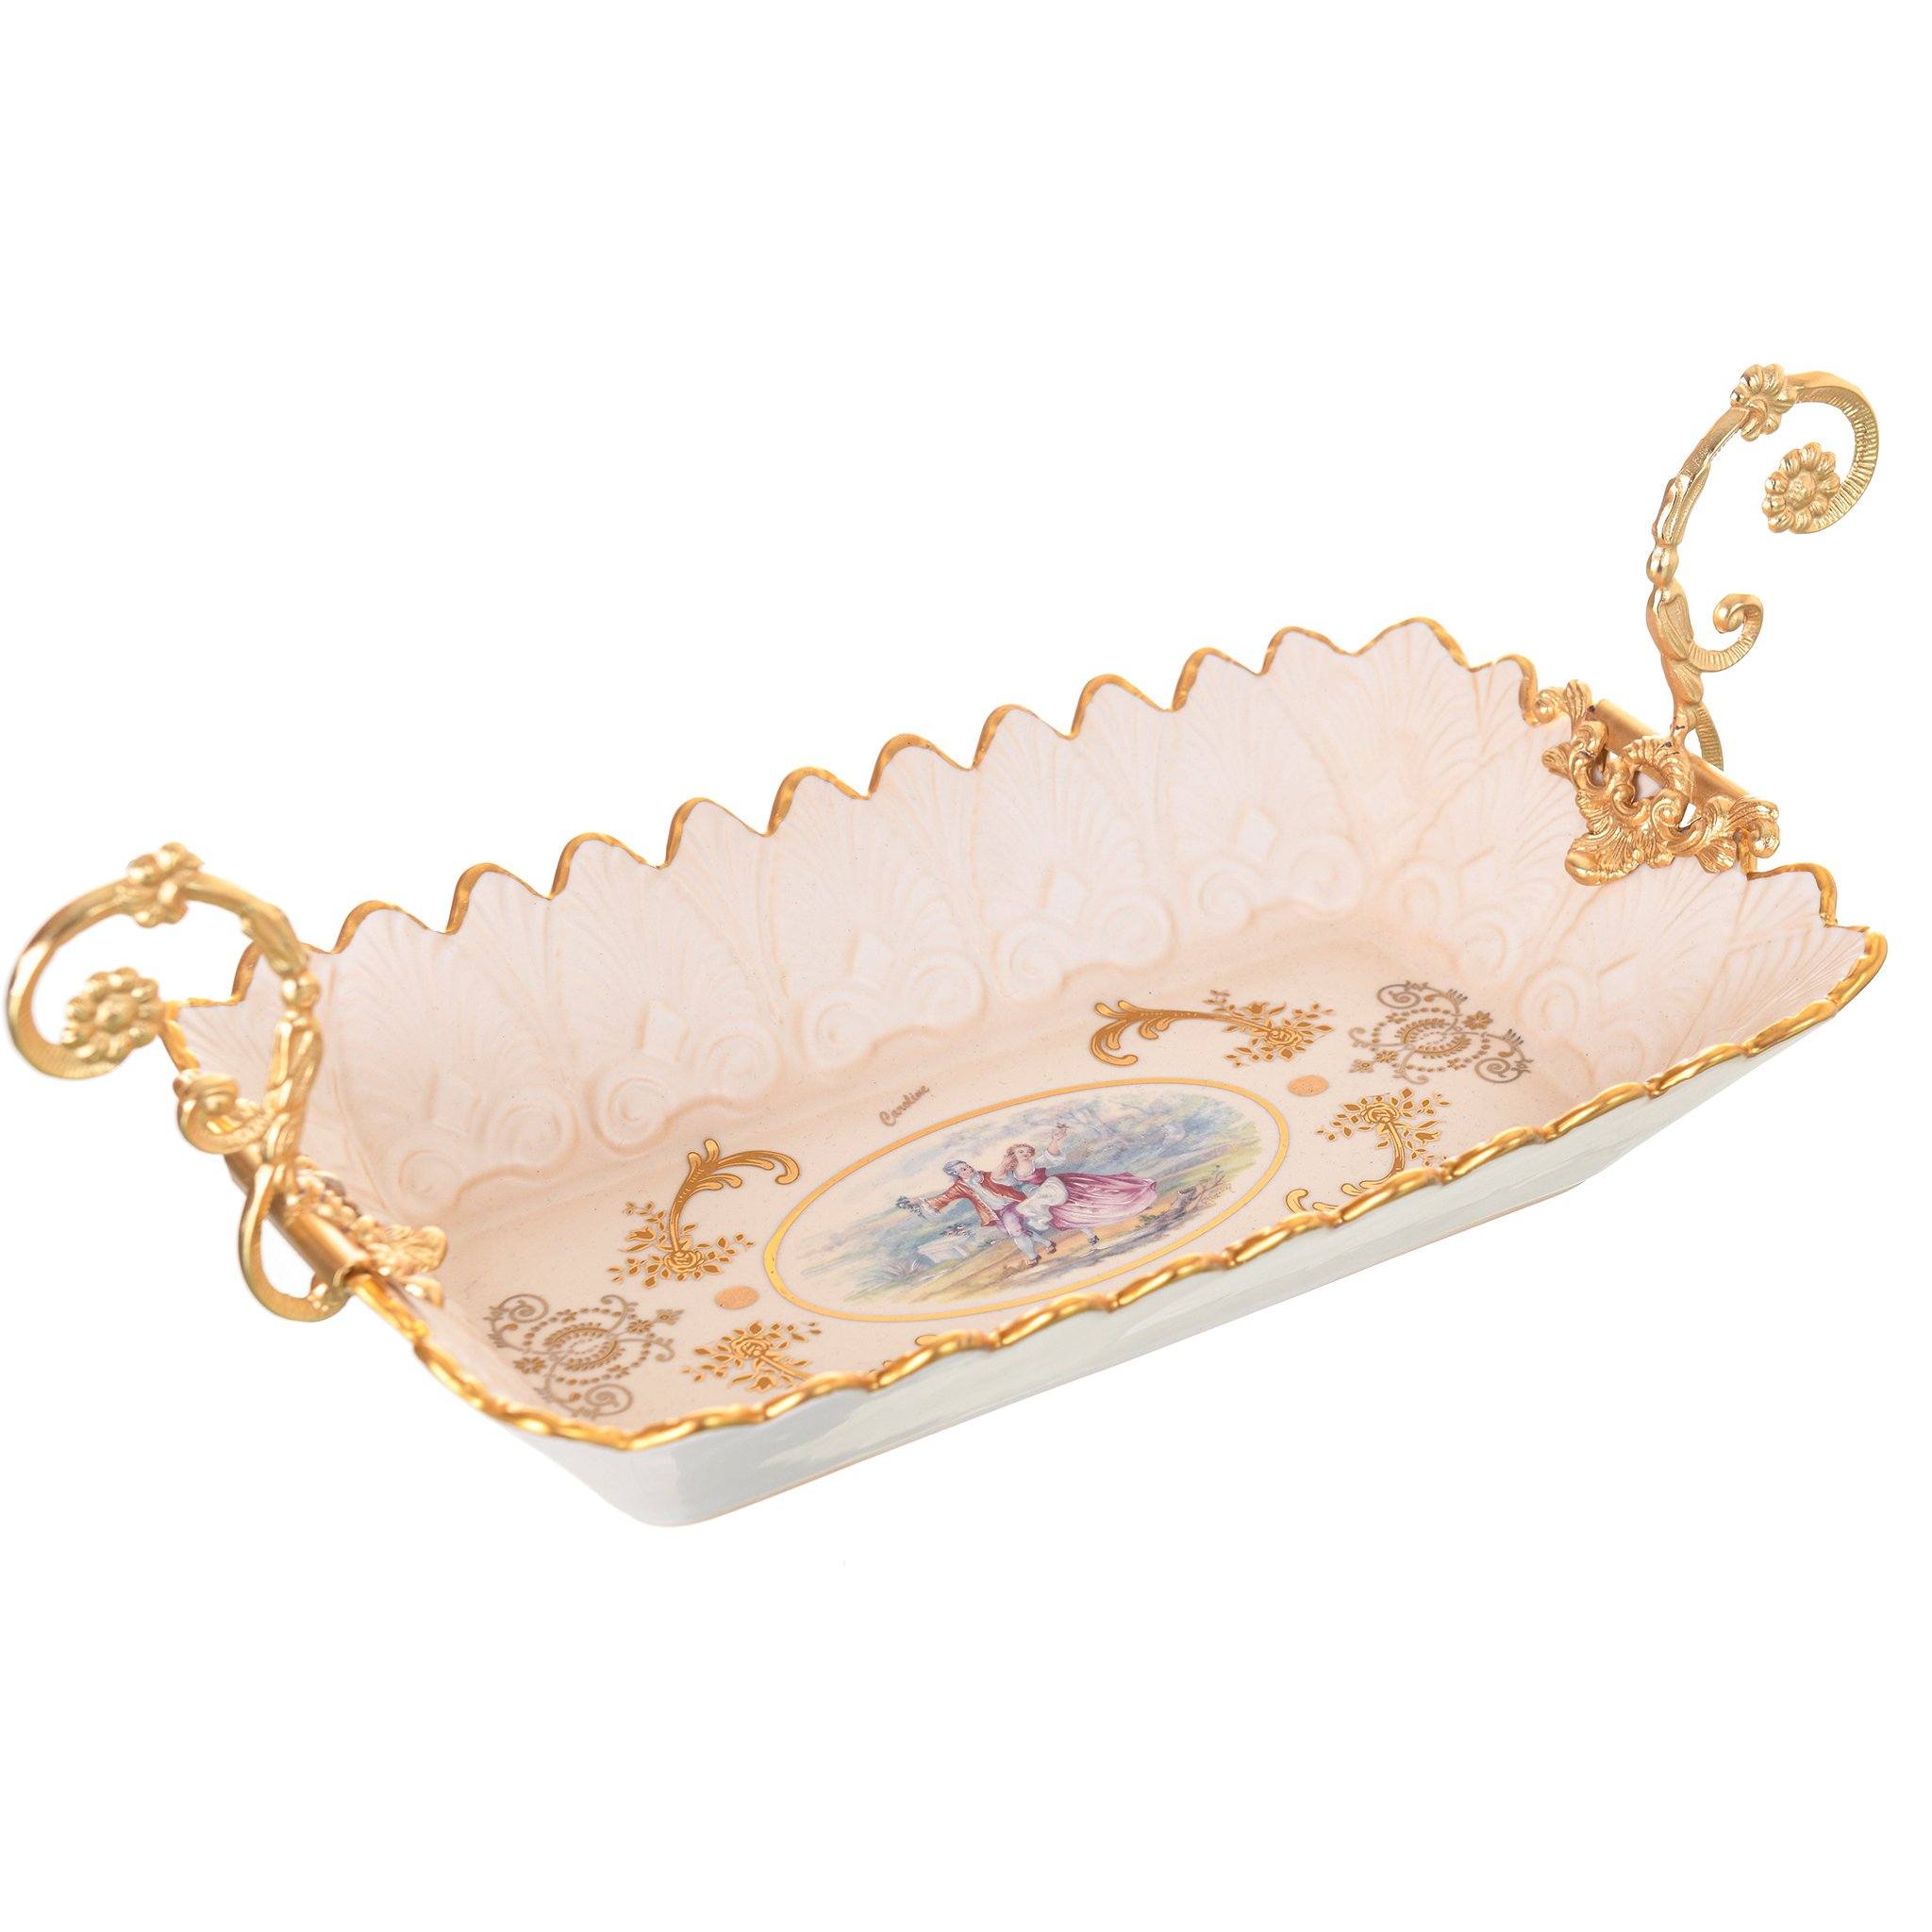 Caroline - Rectangular Plate with Gold Plated Handles - Romeo & Juliet - Beige & Gold - 39x18cm - 58000619